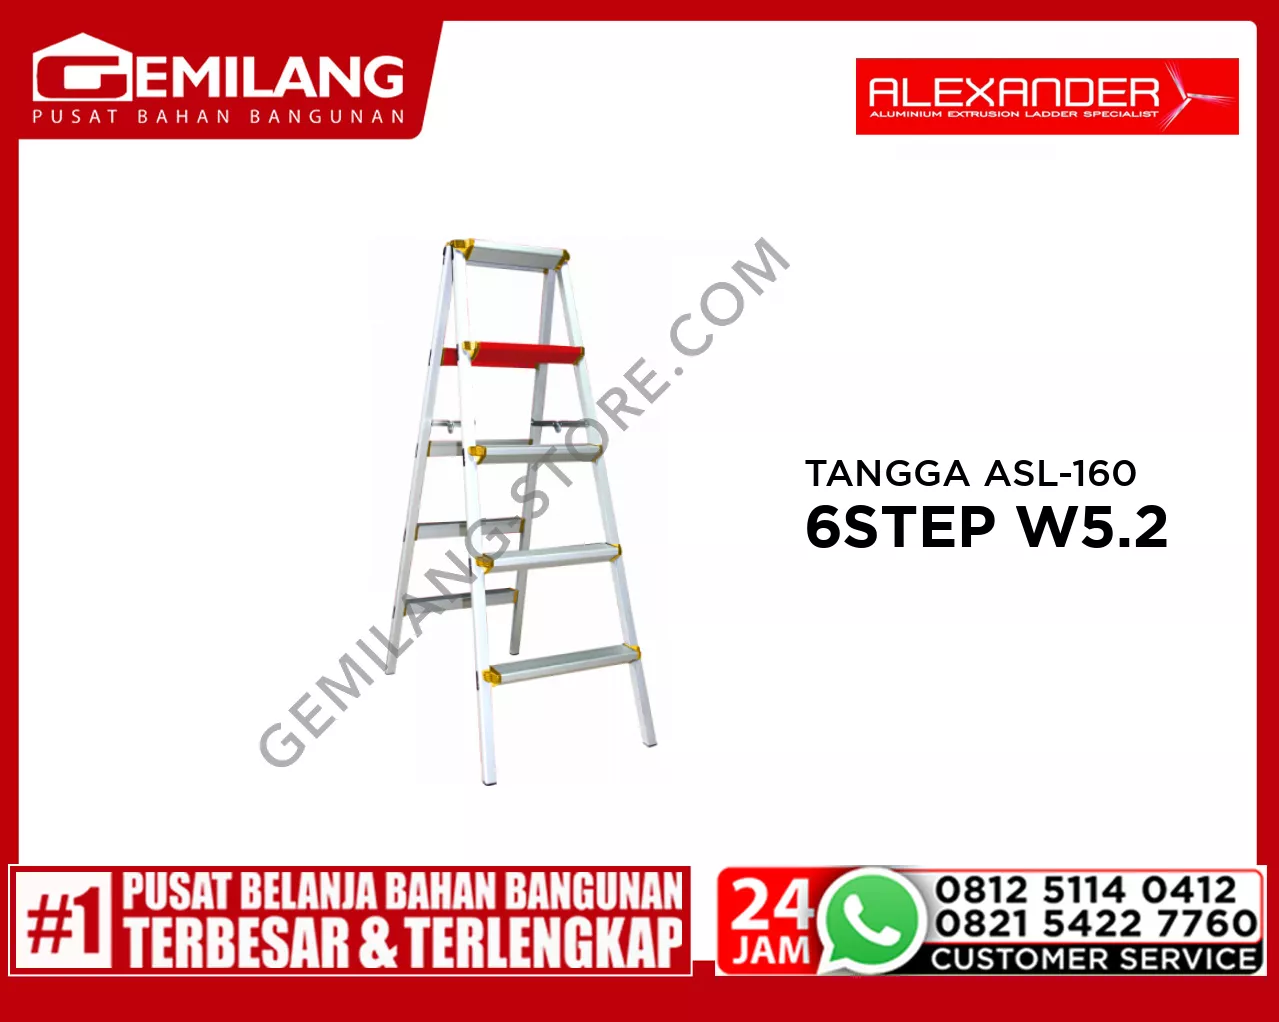 ALEXANDER TANGGA ASL-160 STEPS 6 W5.2 T160cm